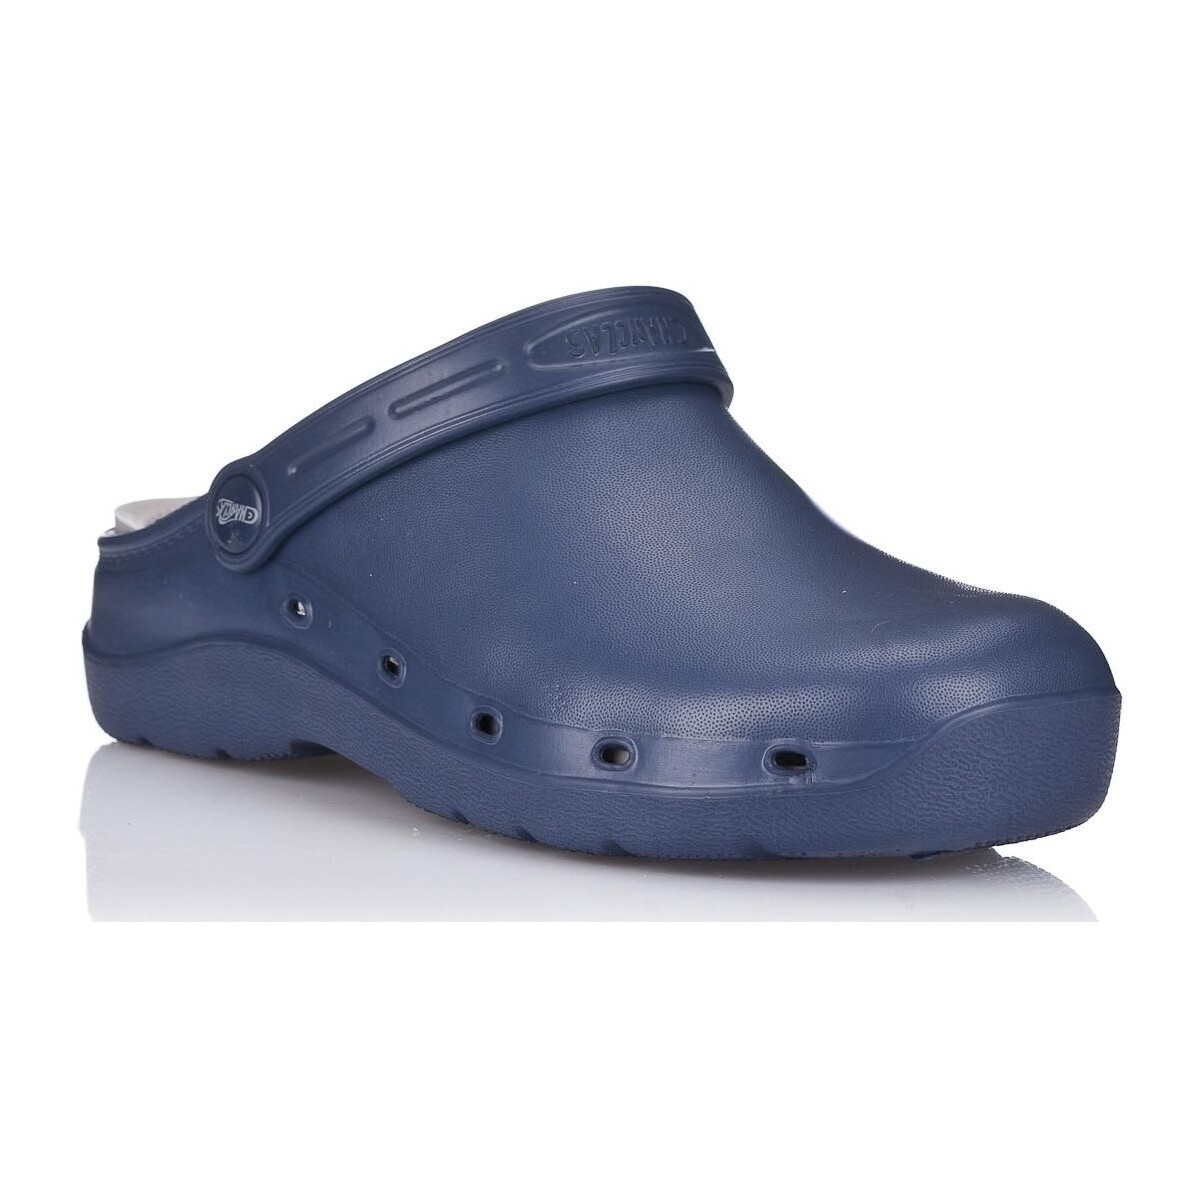 Schuhe Damen Sicherheitsschuh Chanclas 150 Blau